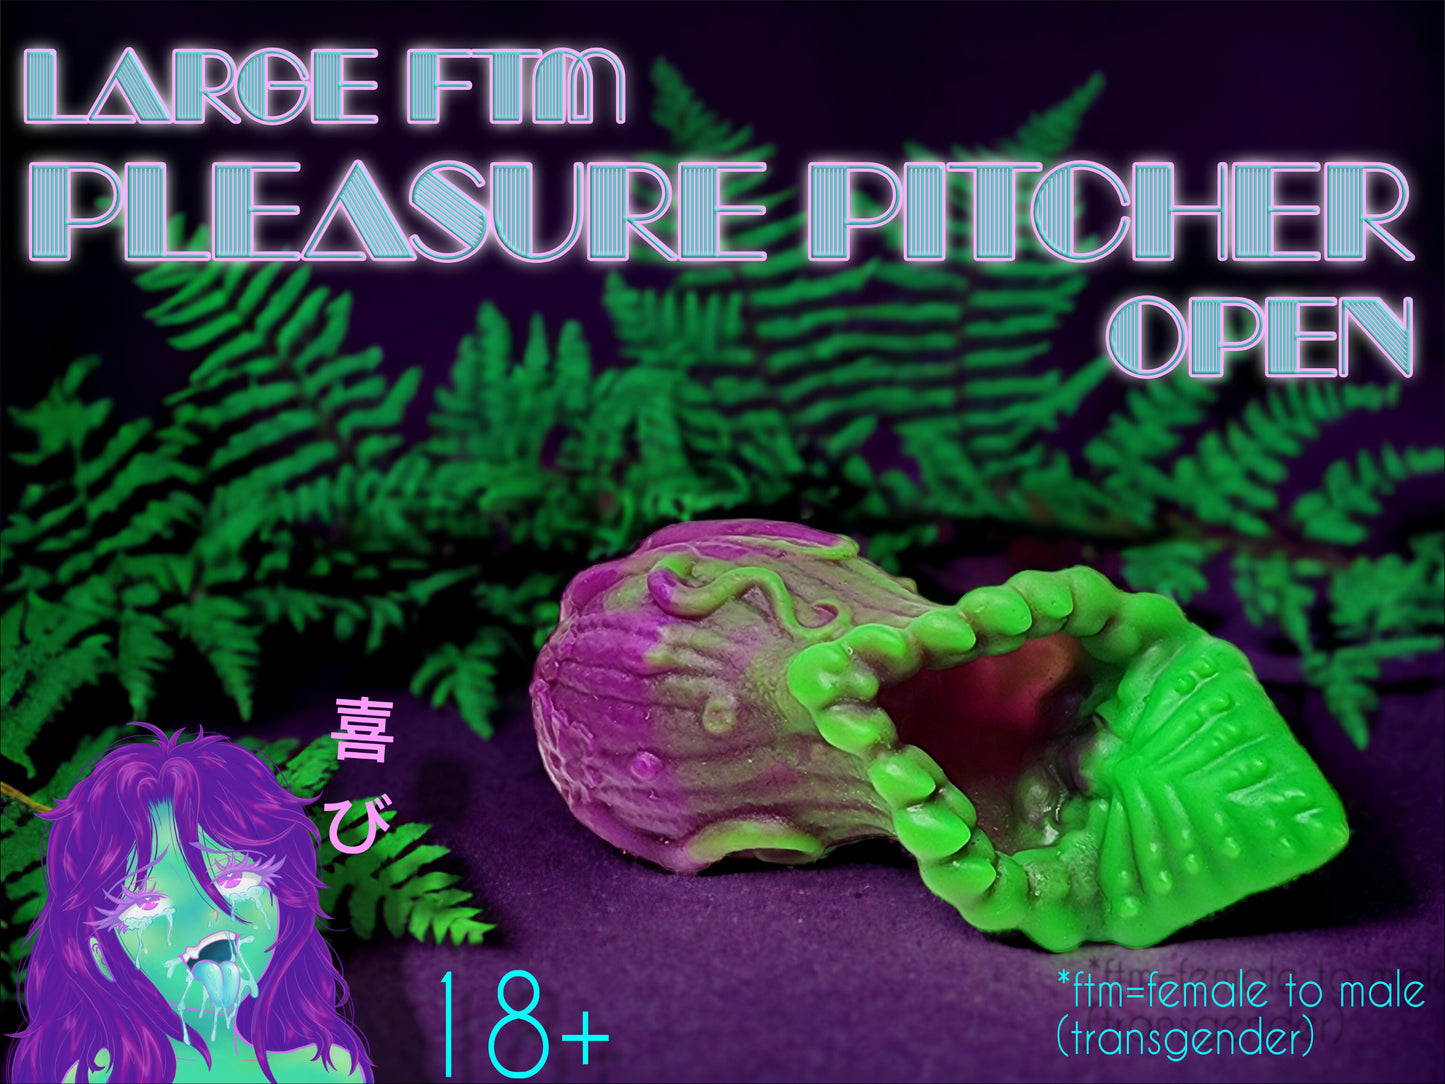 Large FTM Pleasure Pitcher Stroker - Open